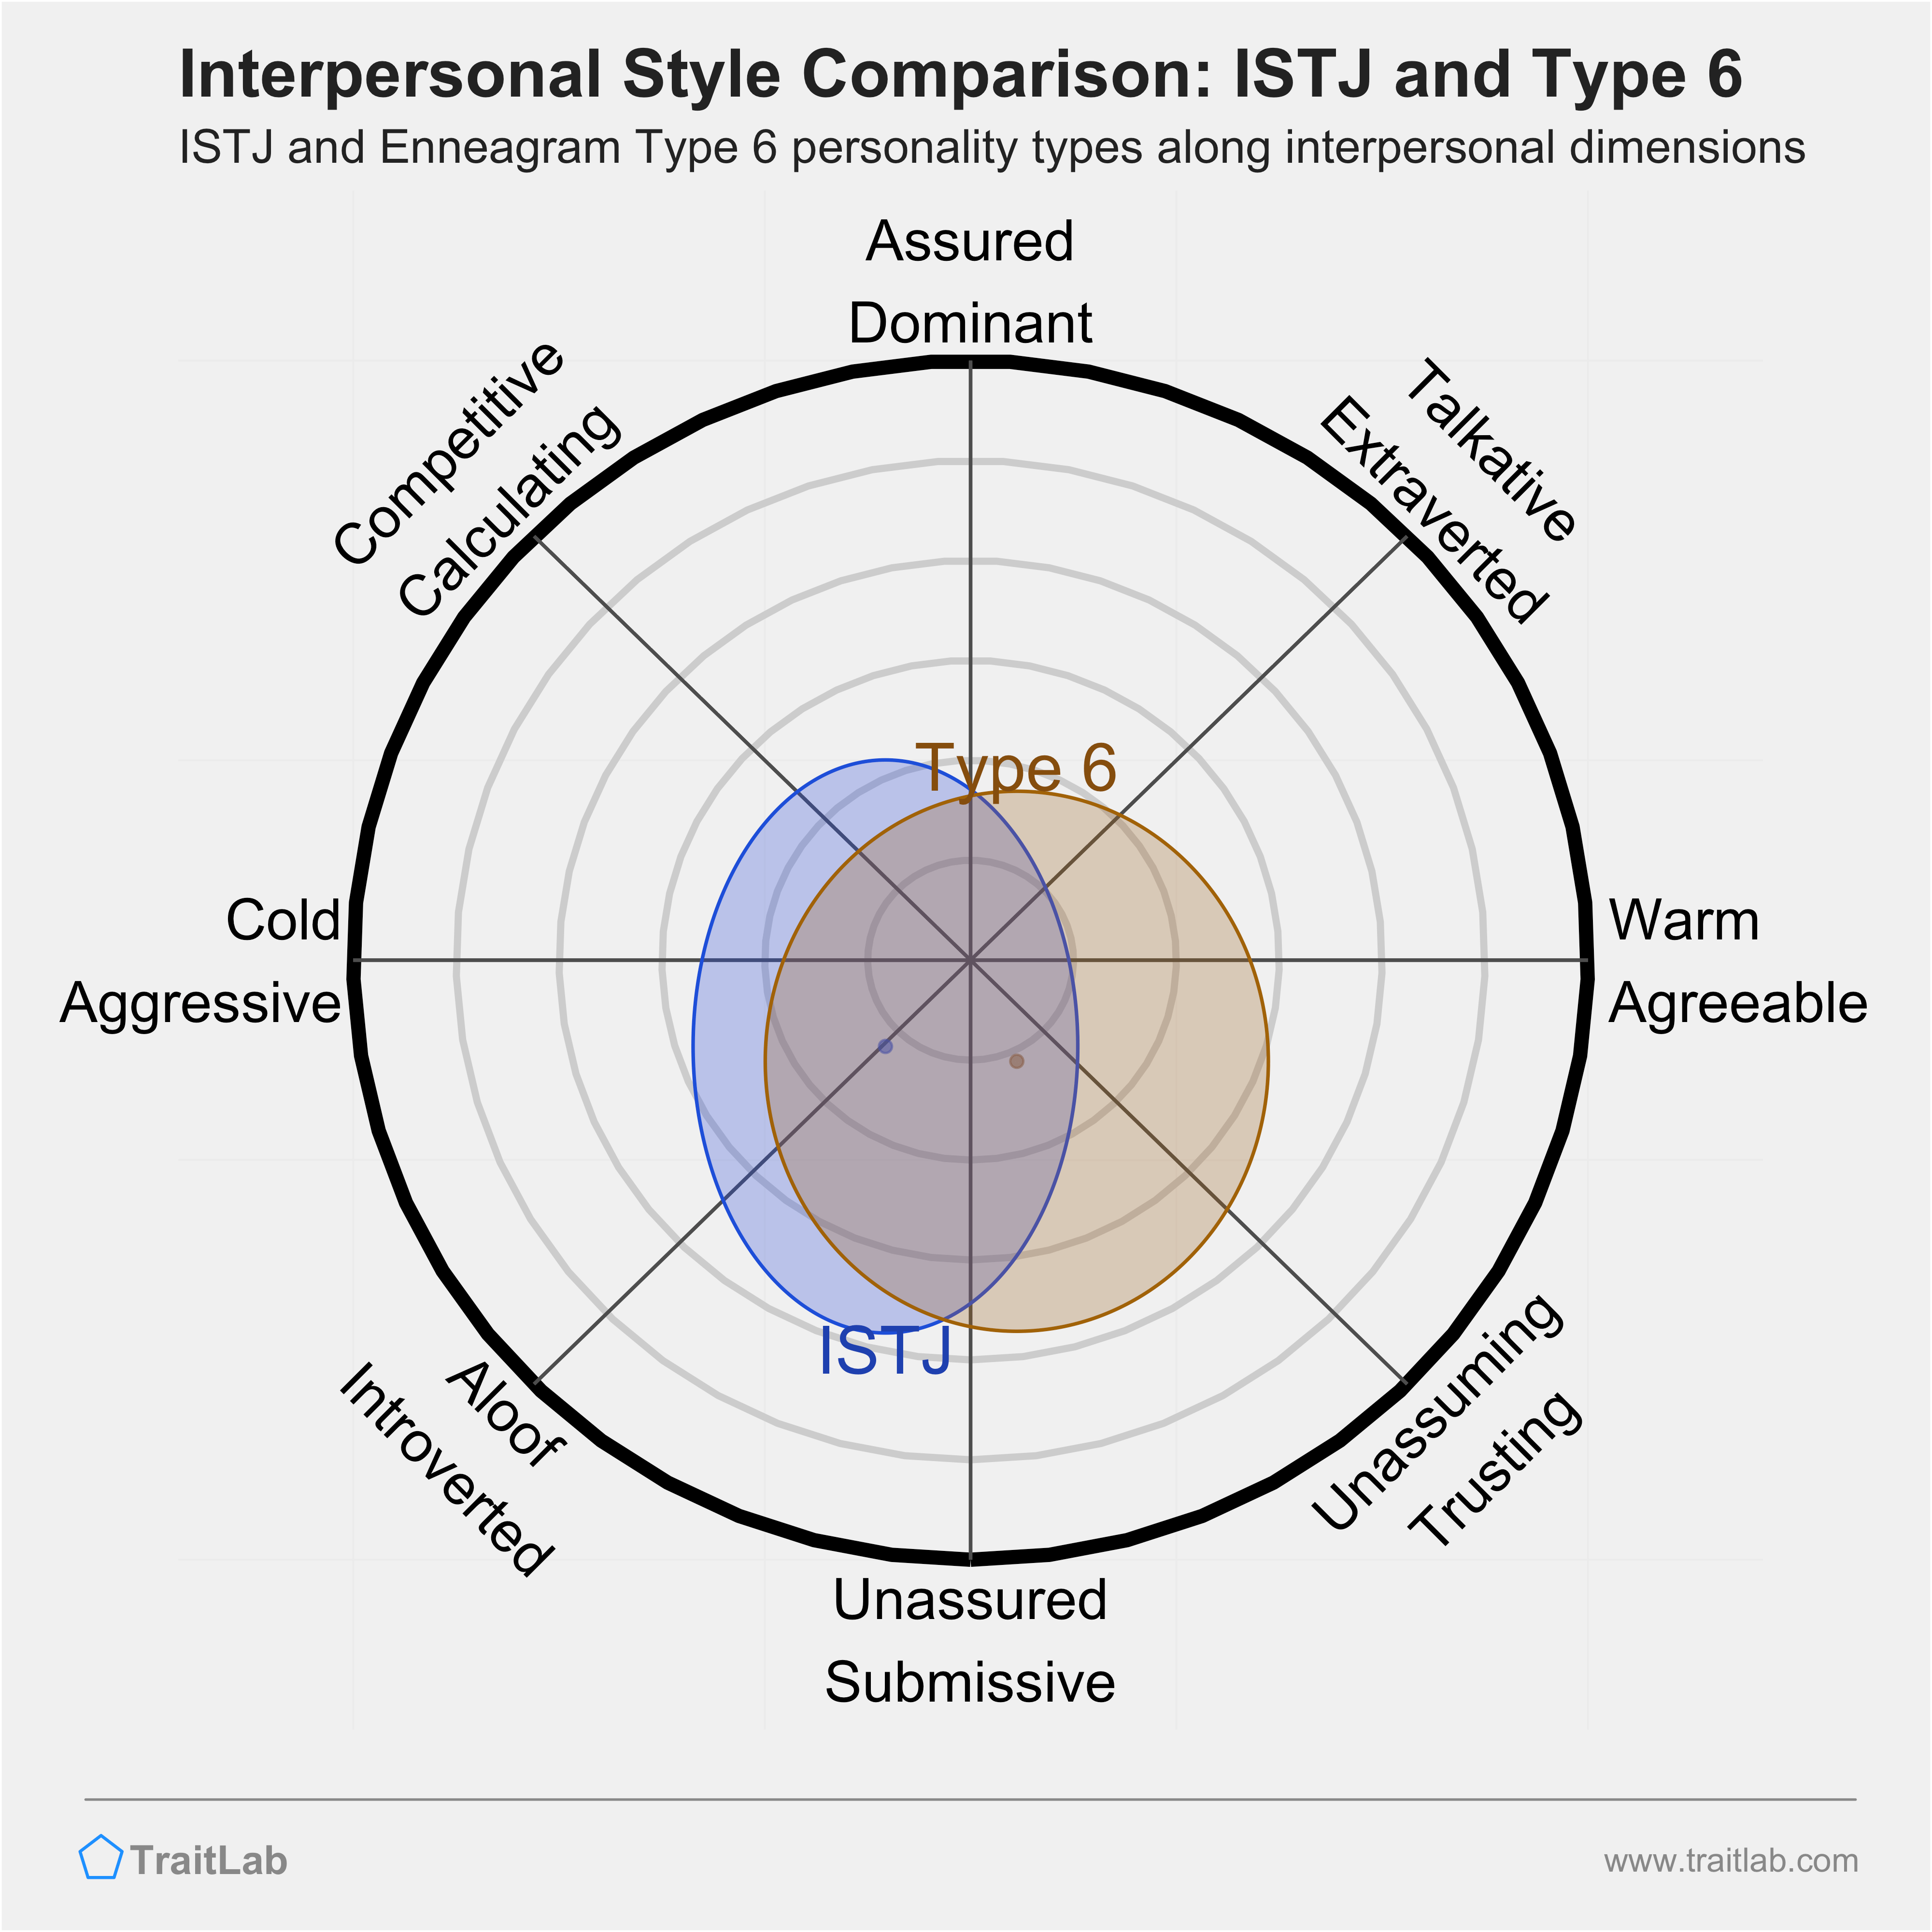 Enneagram ISTJ and Type 6 comparison across interpersonal dimensions